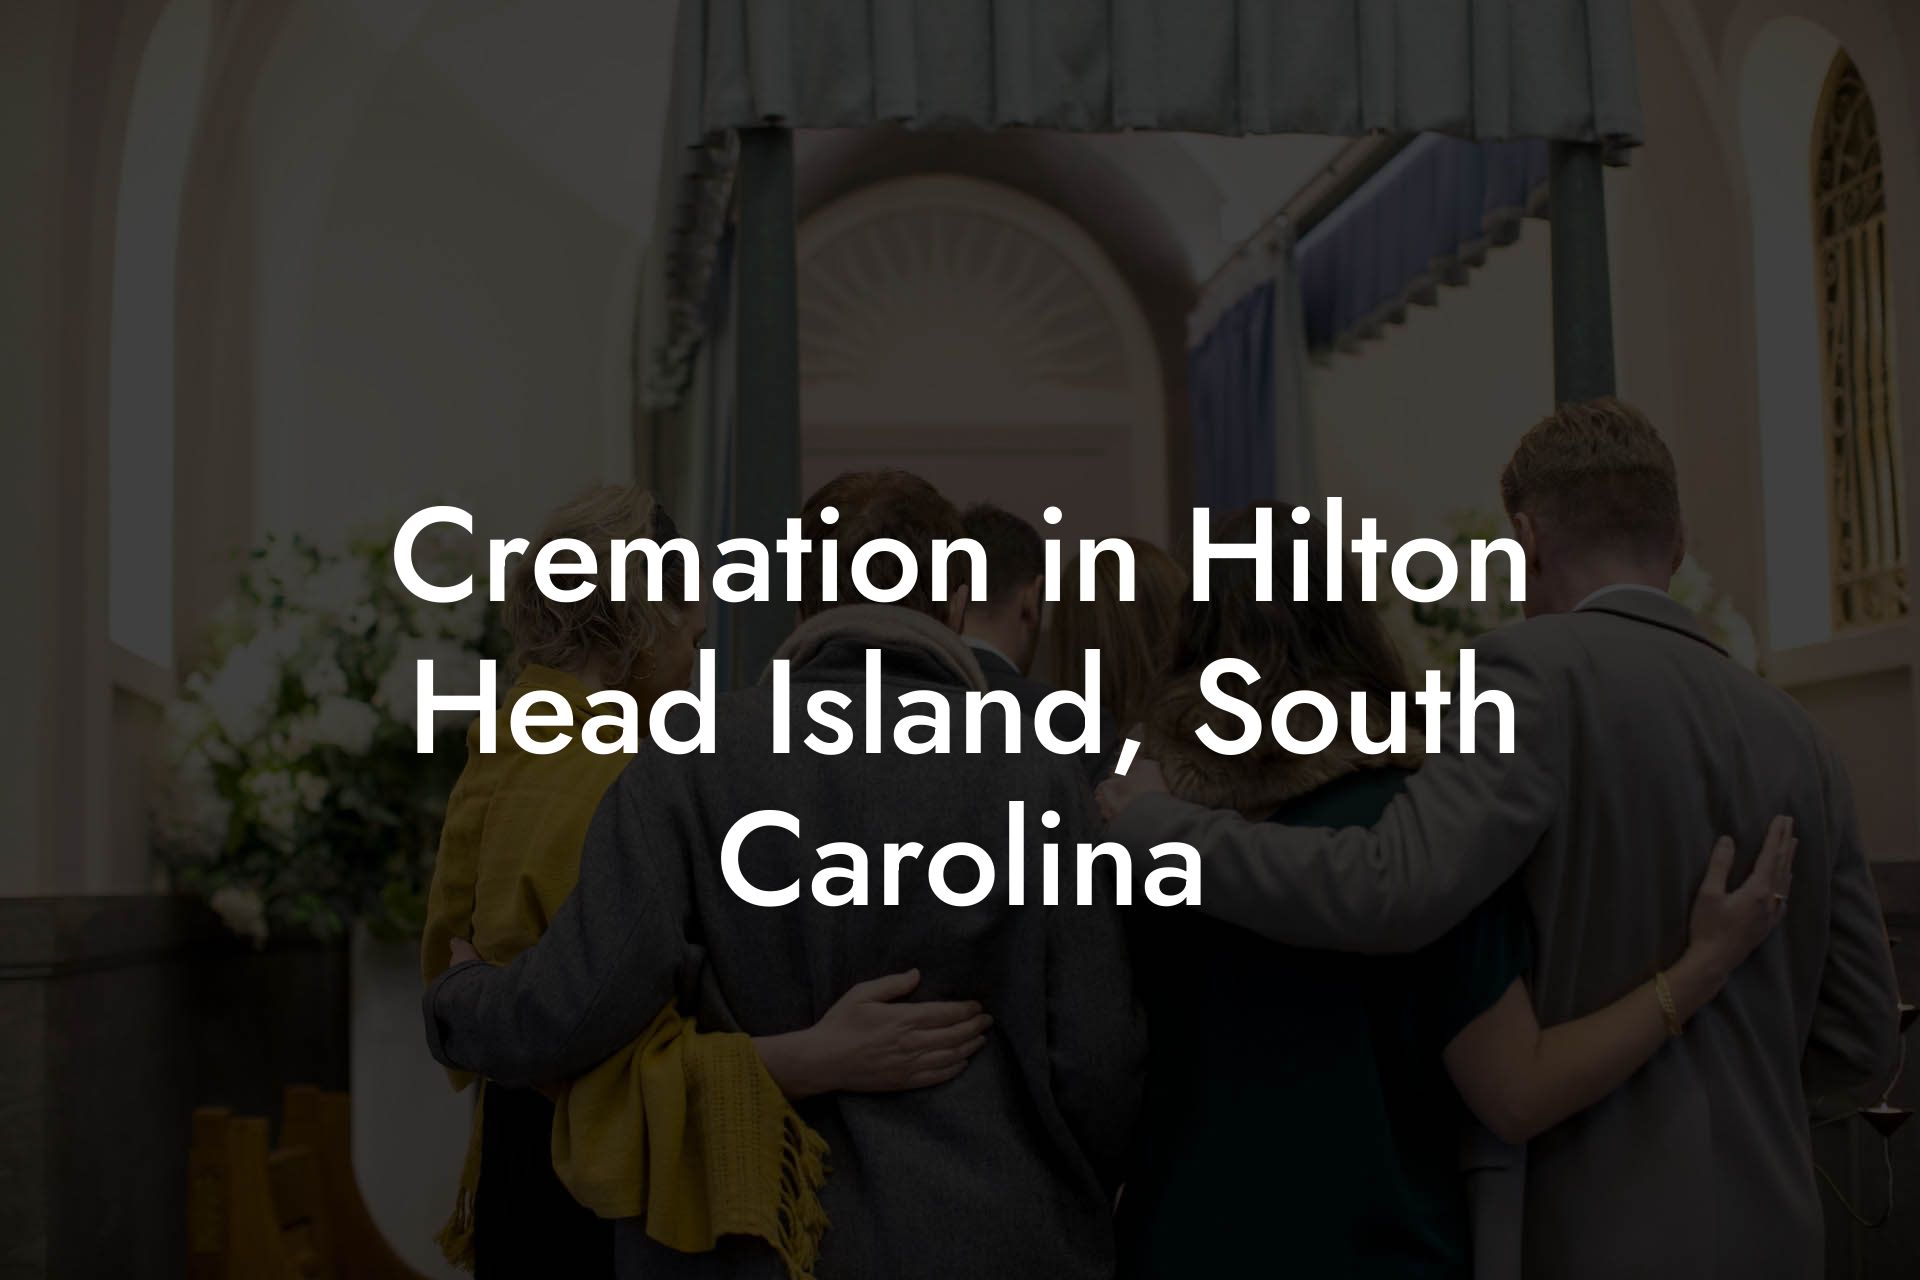 Cremation in Hilton Head Island, South Carolina